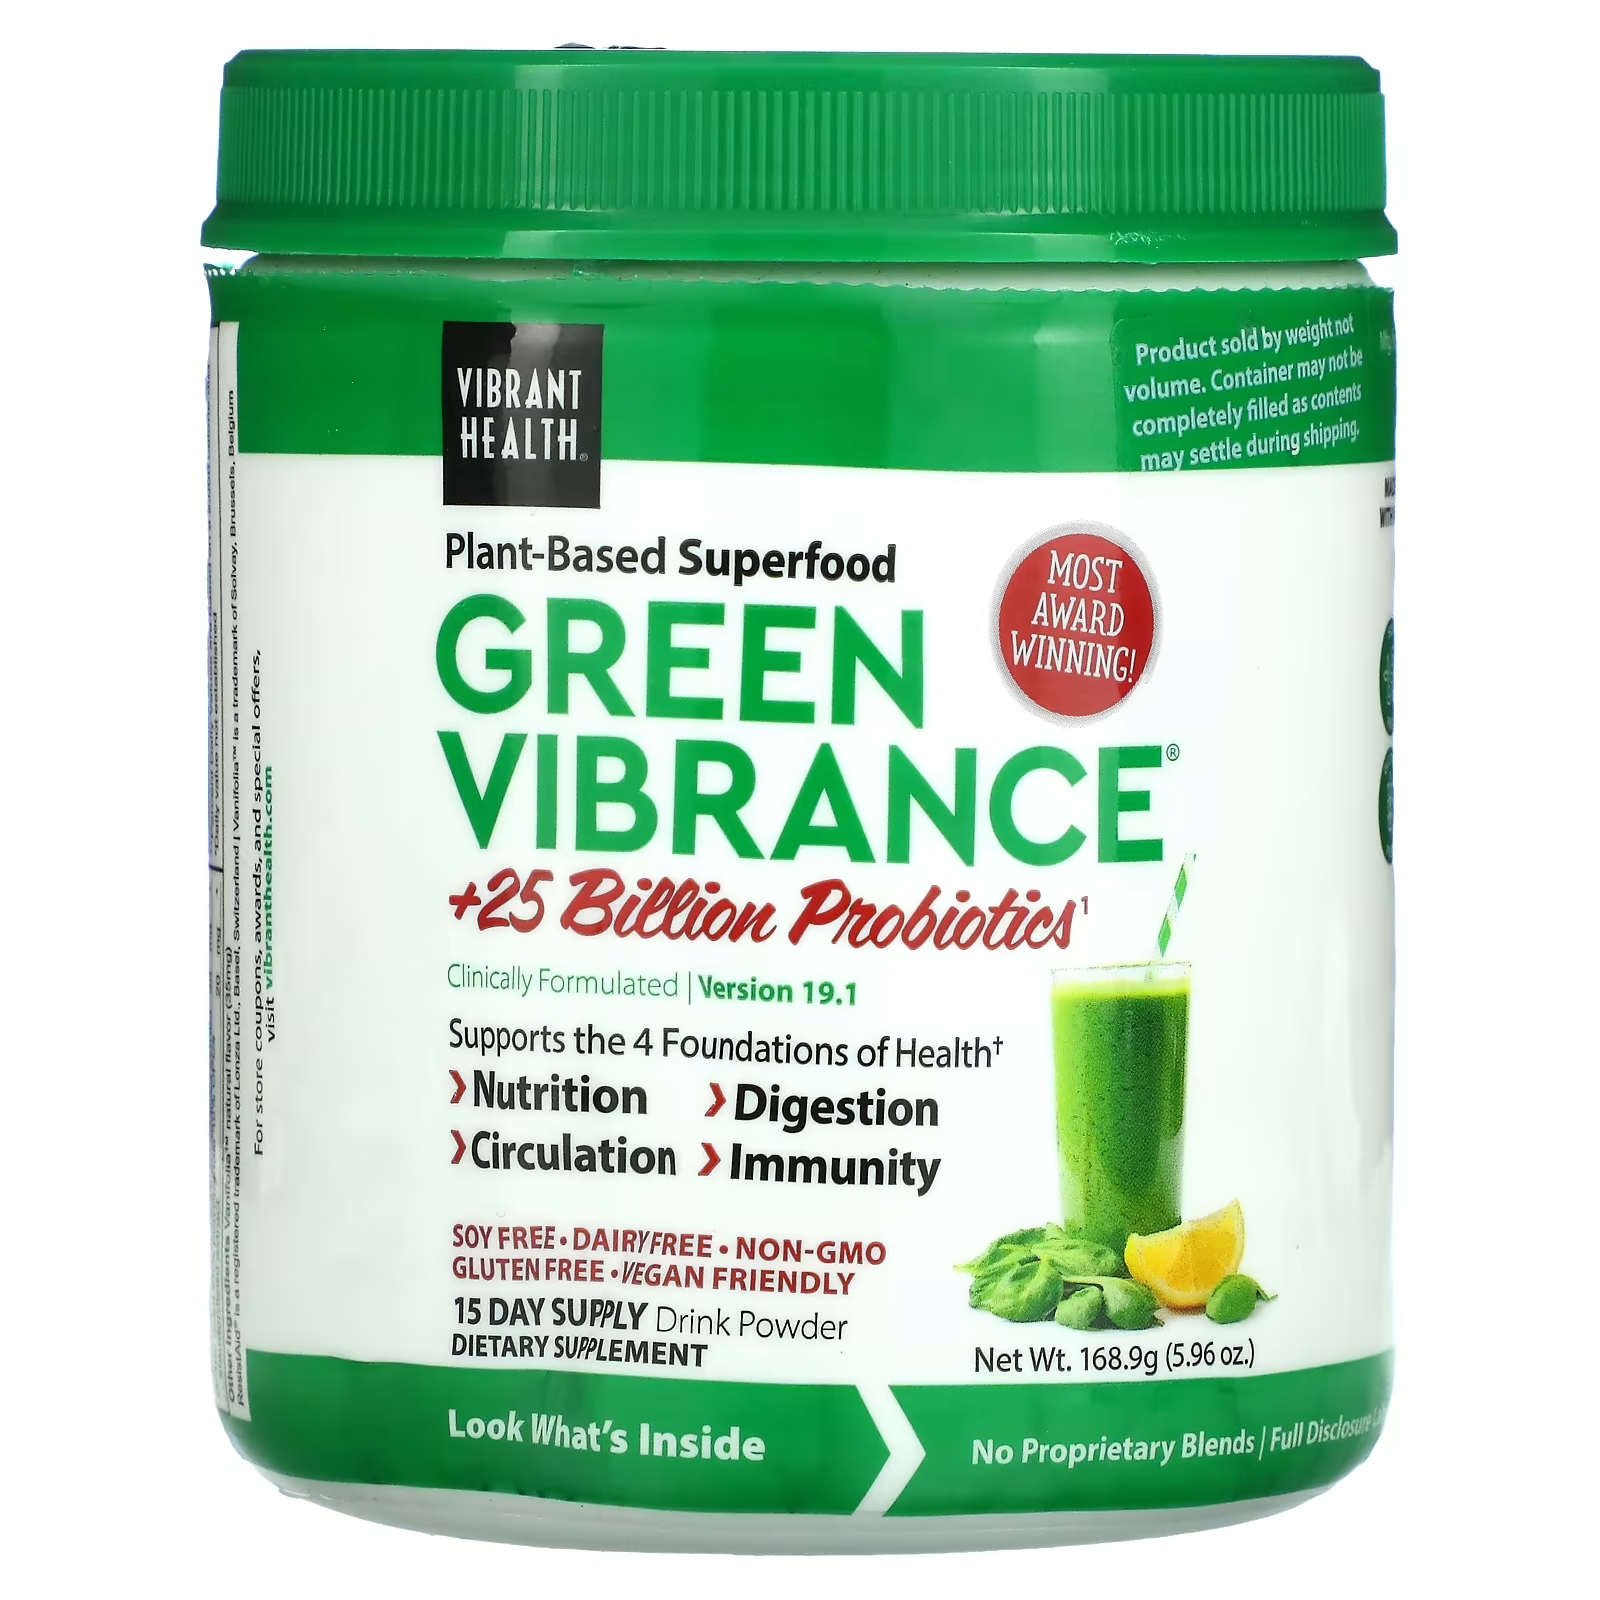 Пробиотики Vibrant Health Green Vibrance, 168 г vibrant health green vibrance 25 млрд пробиотиков версия 19 1 675 6 г 23 83 унции